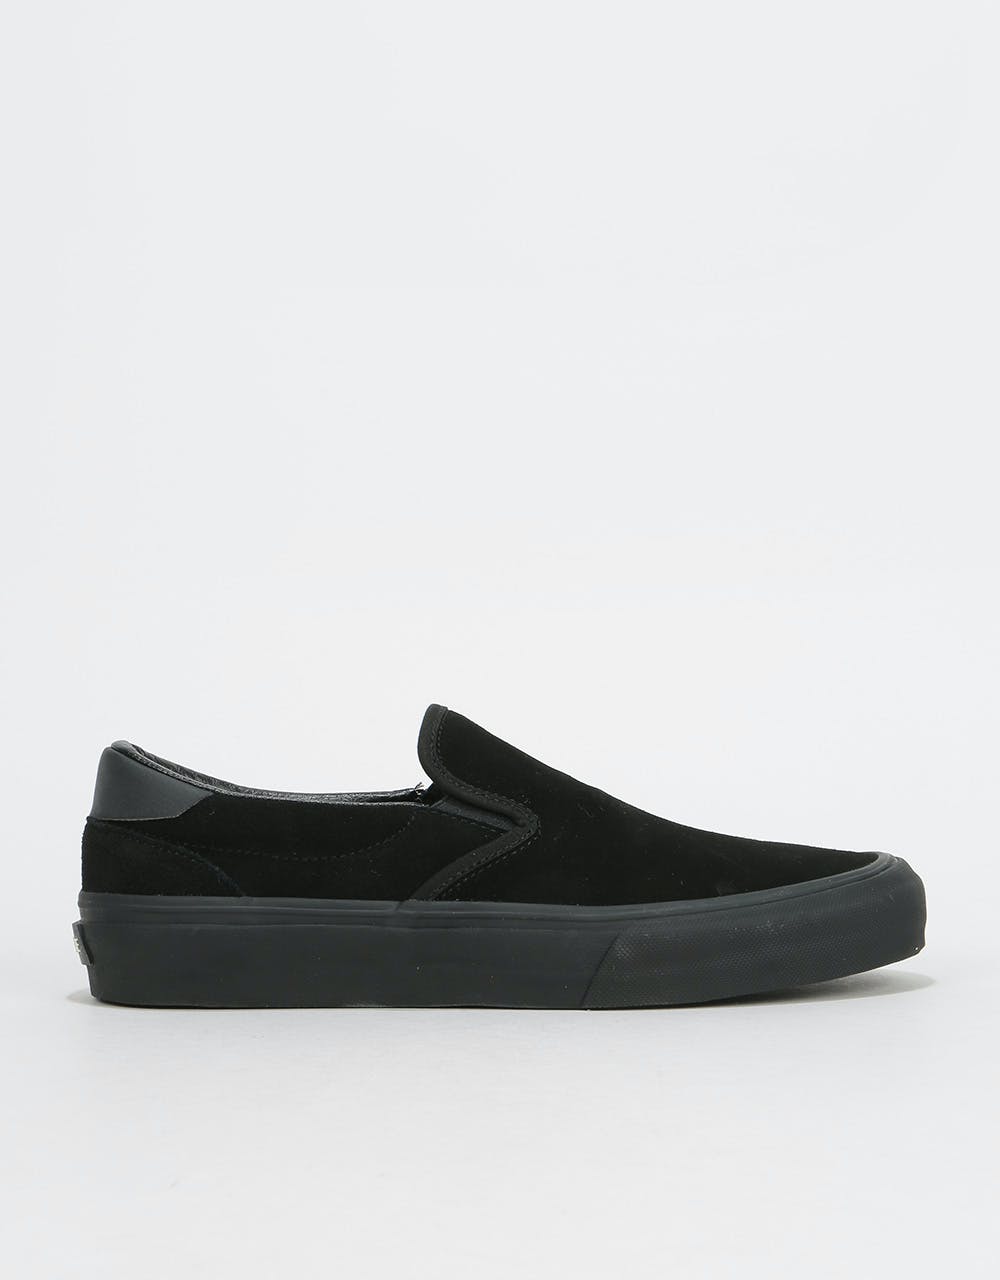 Straye Ventura Slip-On Skate Shoes - Black/Black Suede